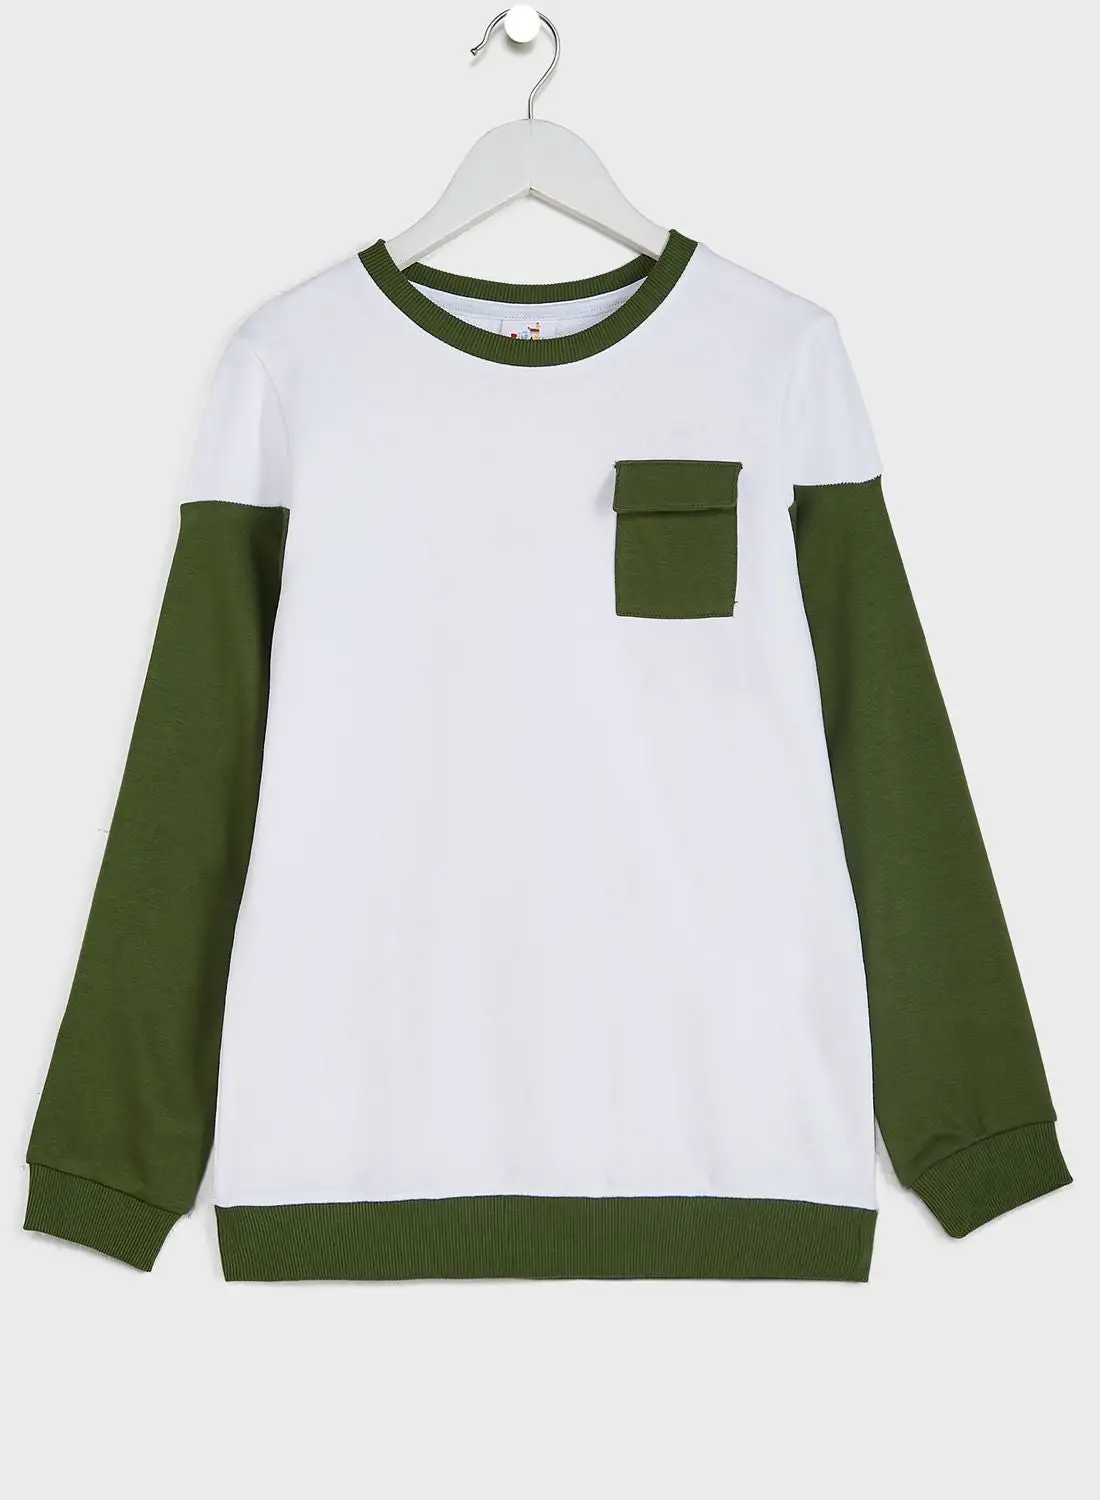 Pinata Youth Colorblock Sweatshirt